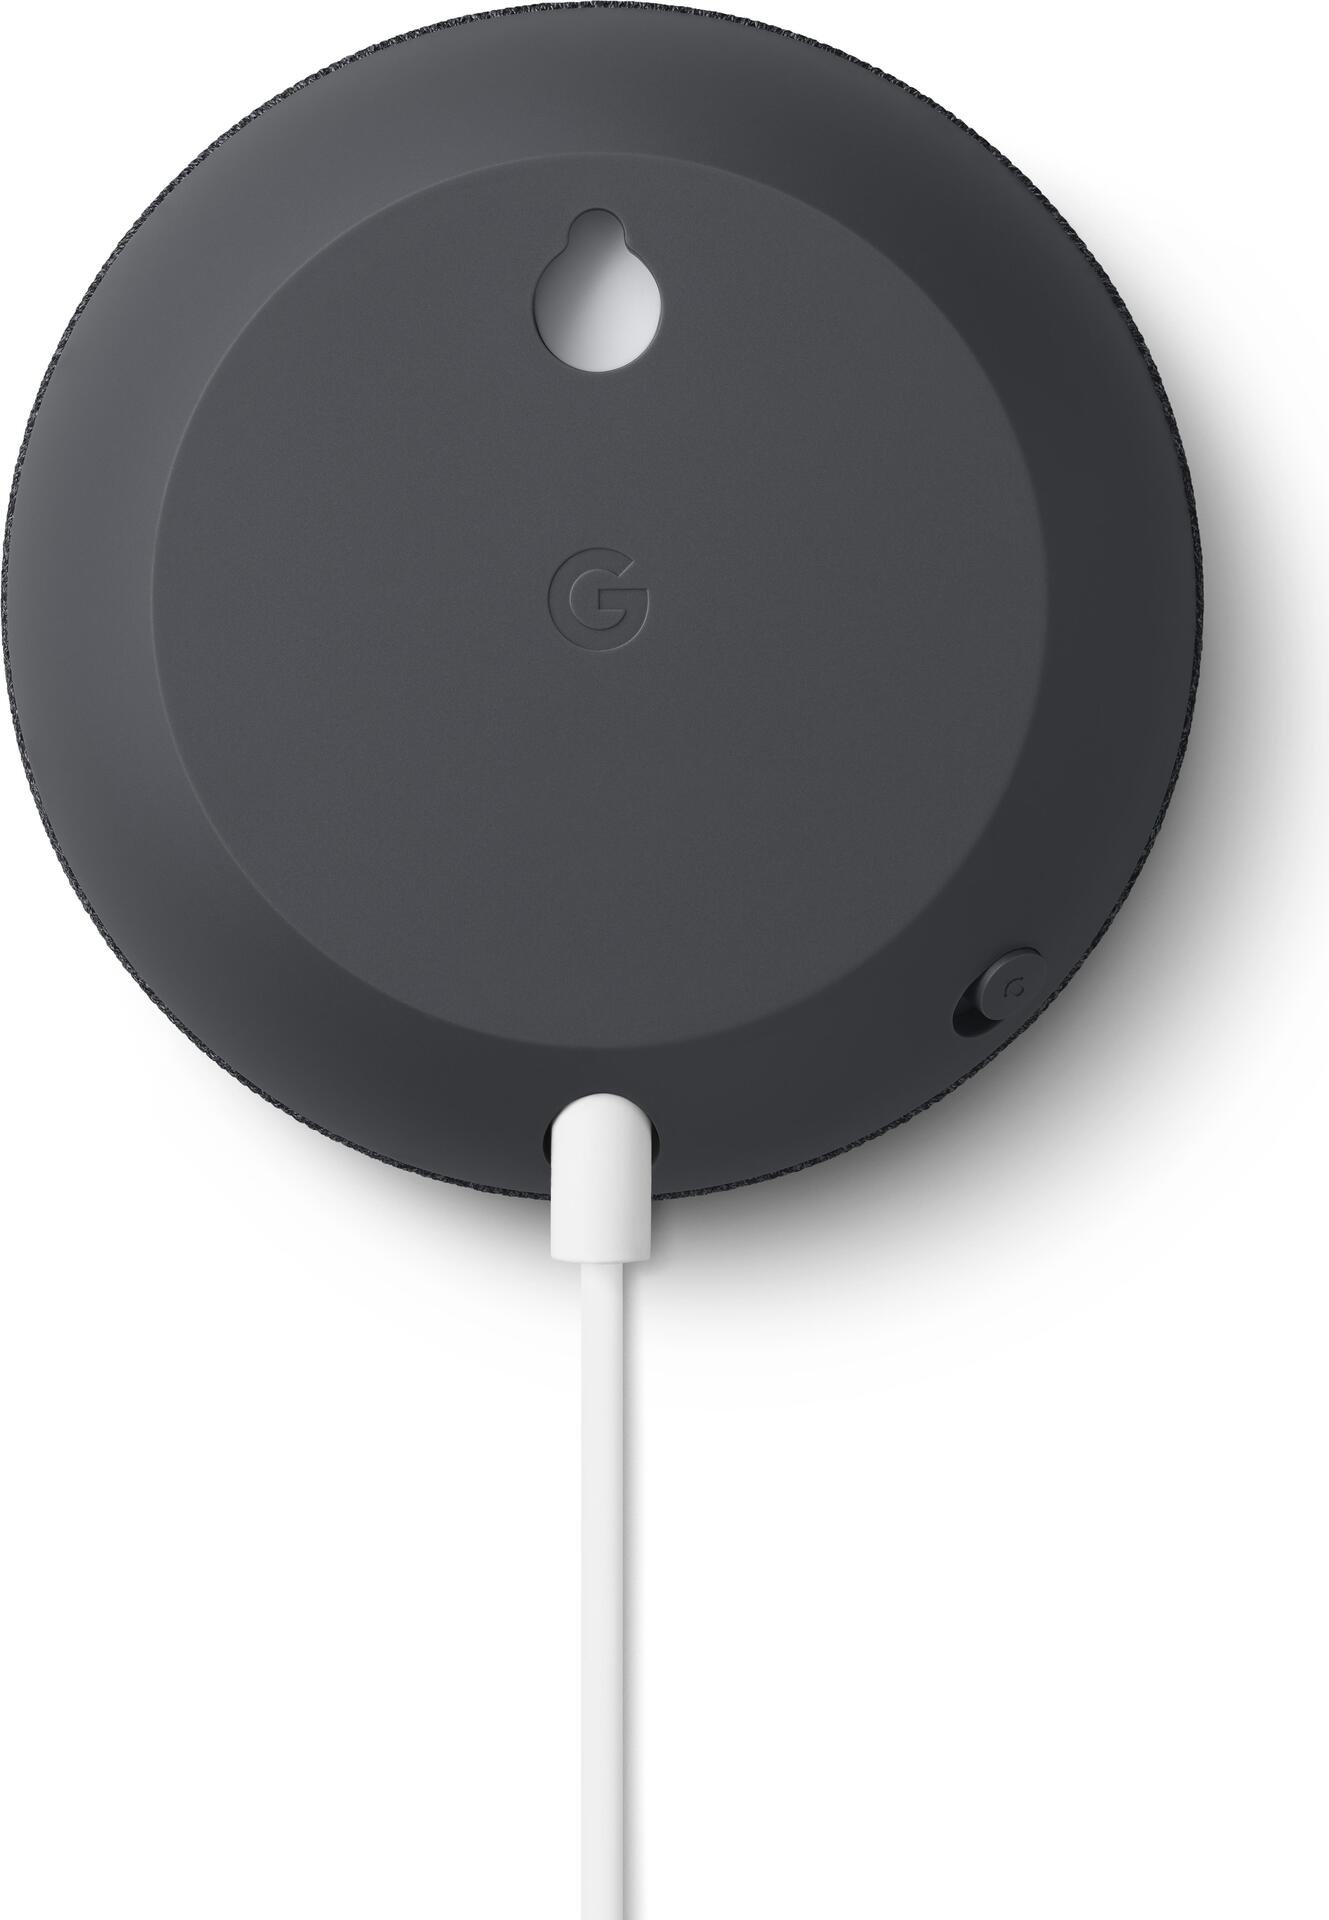 Image of Google Nest Mini - Google Assistant - Rechteck - Anthrazit - Stoff - Kunststoff - Chromecast - Android - iOS (GA00781-NO)